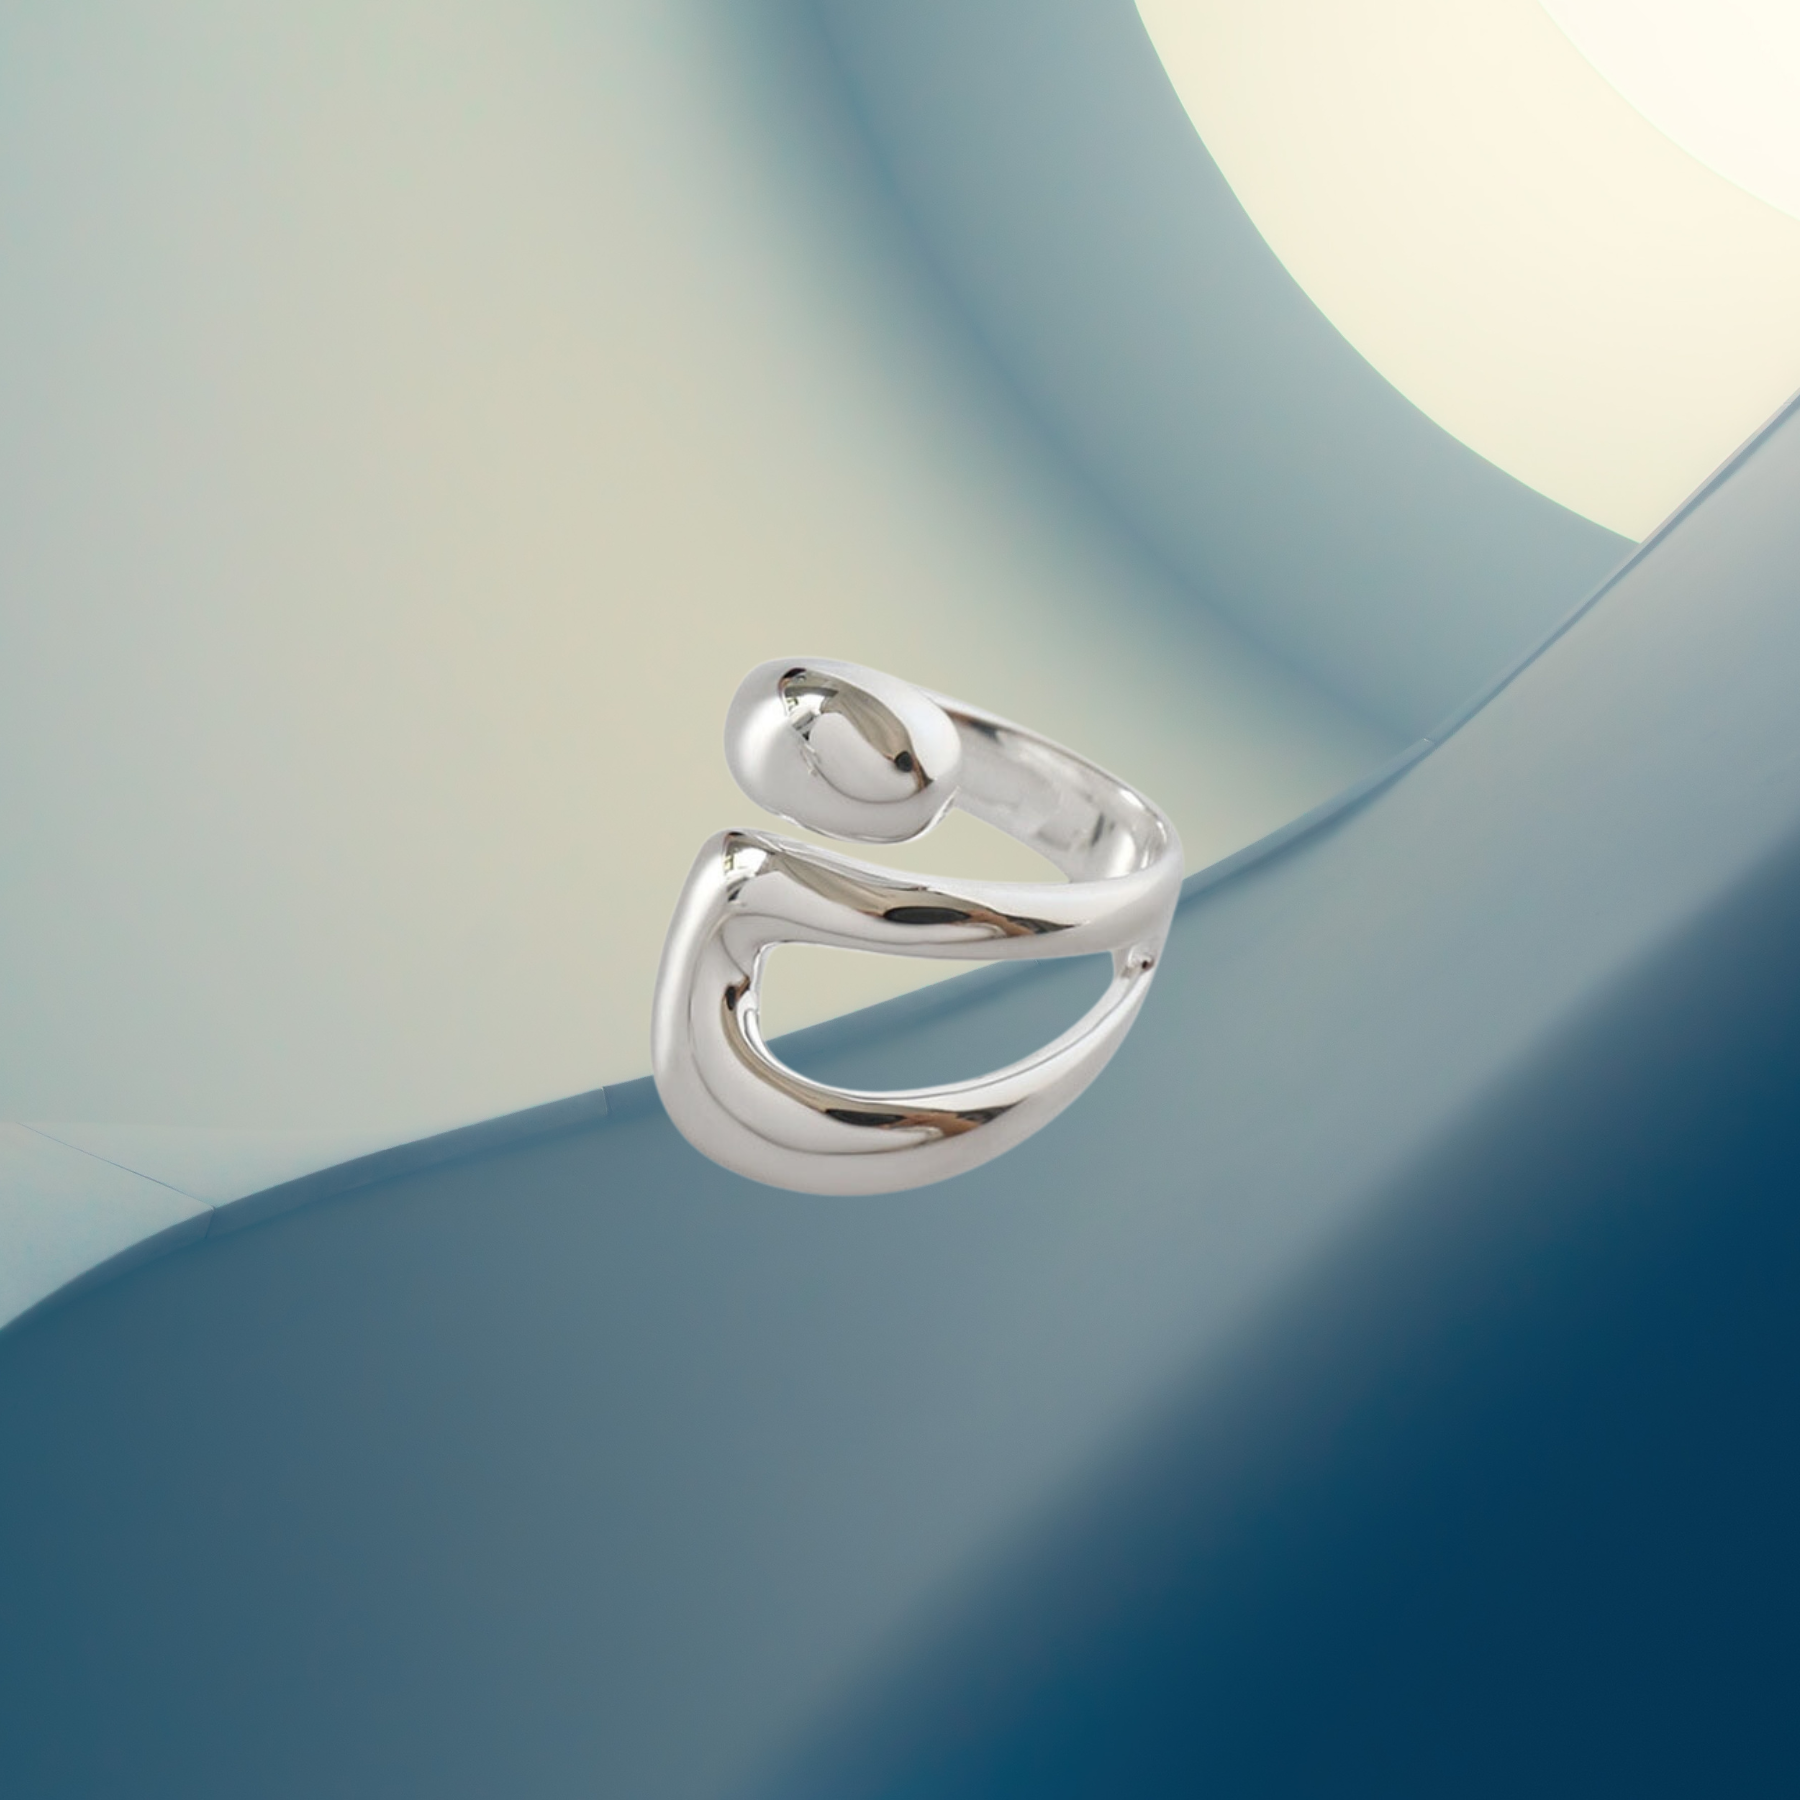 Contemporary Edge Ring by Metopia Designs